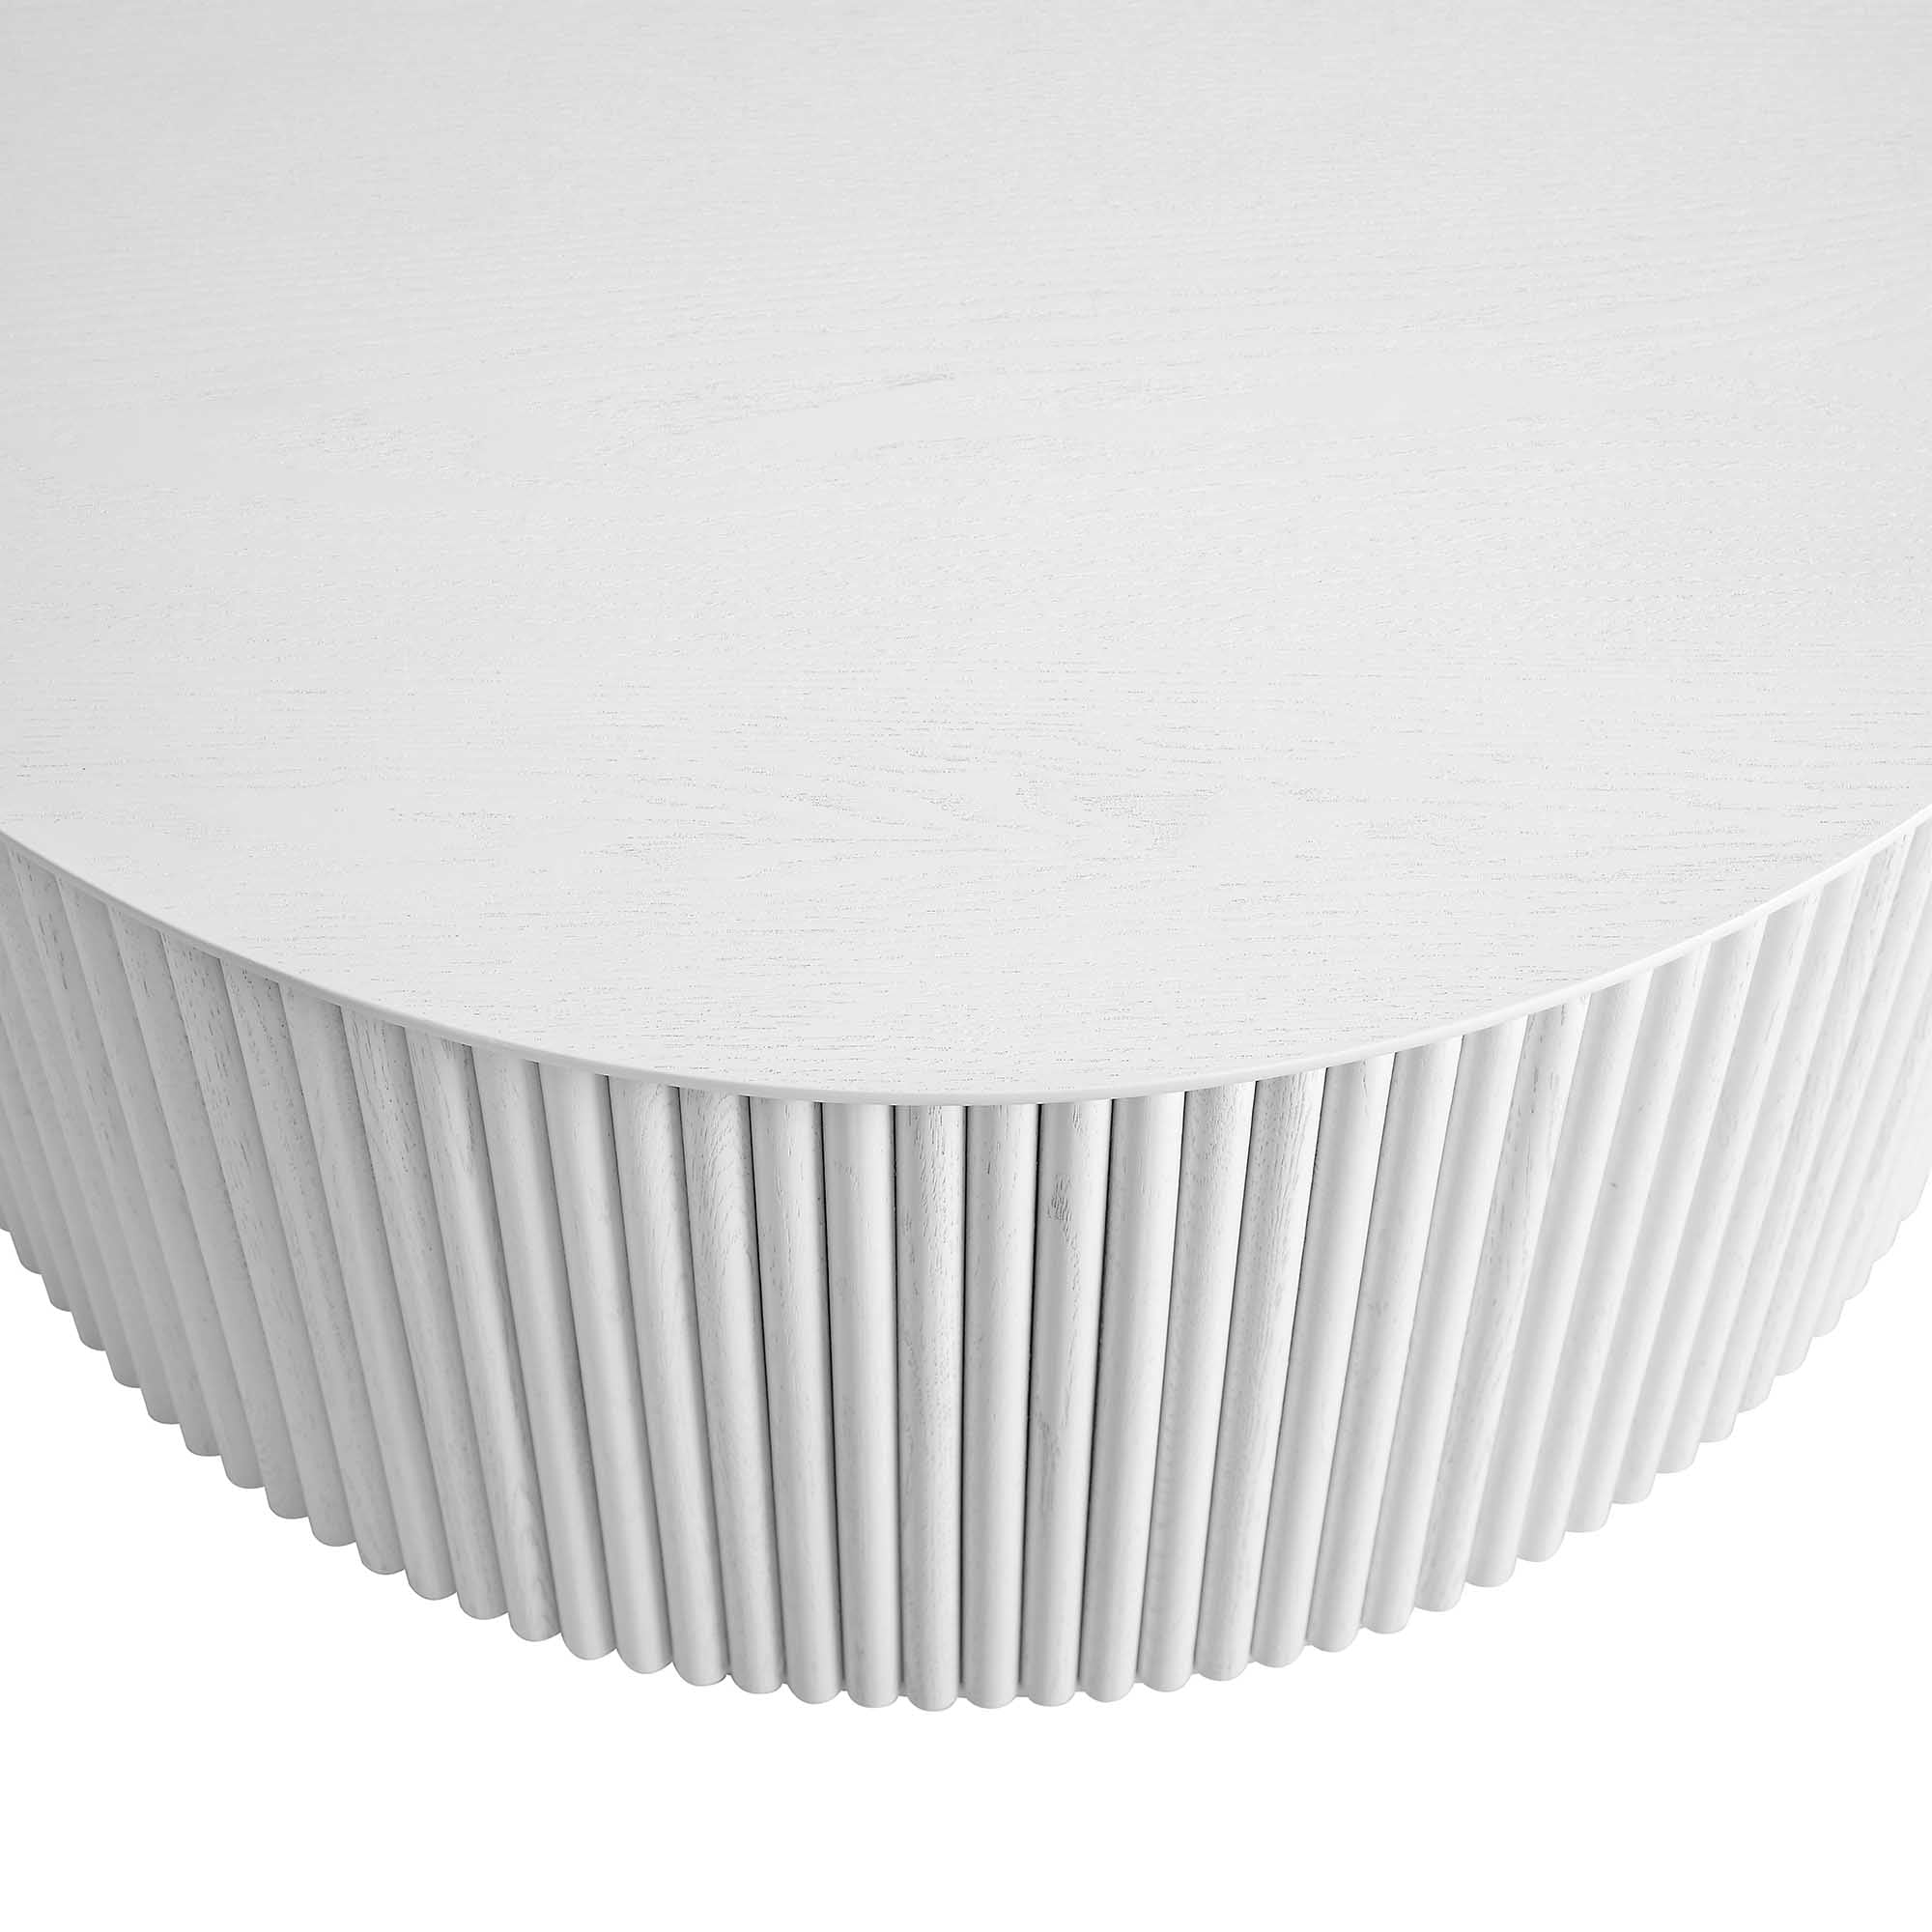 Maru Oak Round Coffee Table with Storage, Washed White